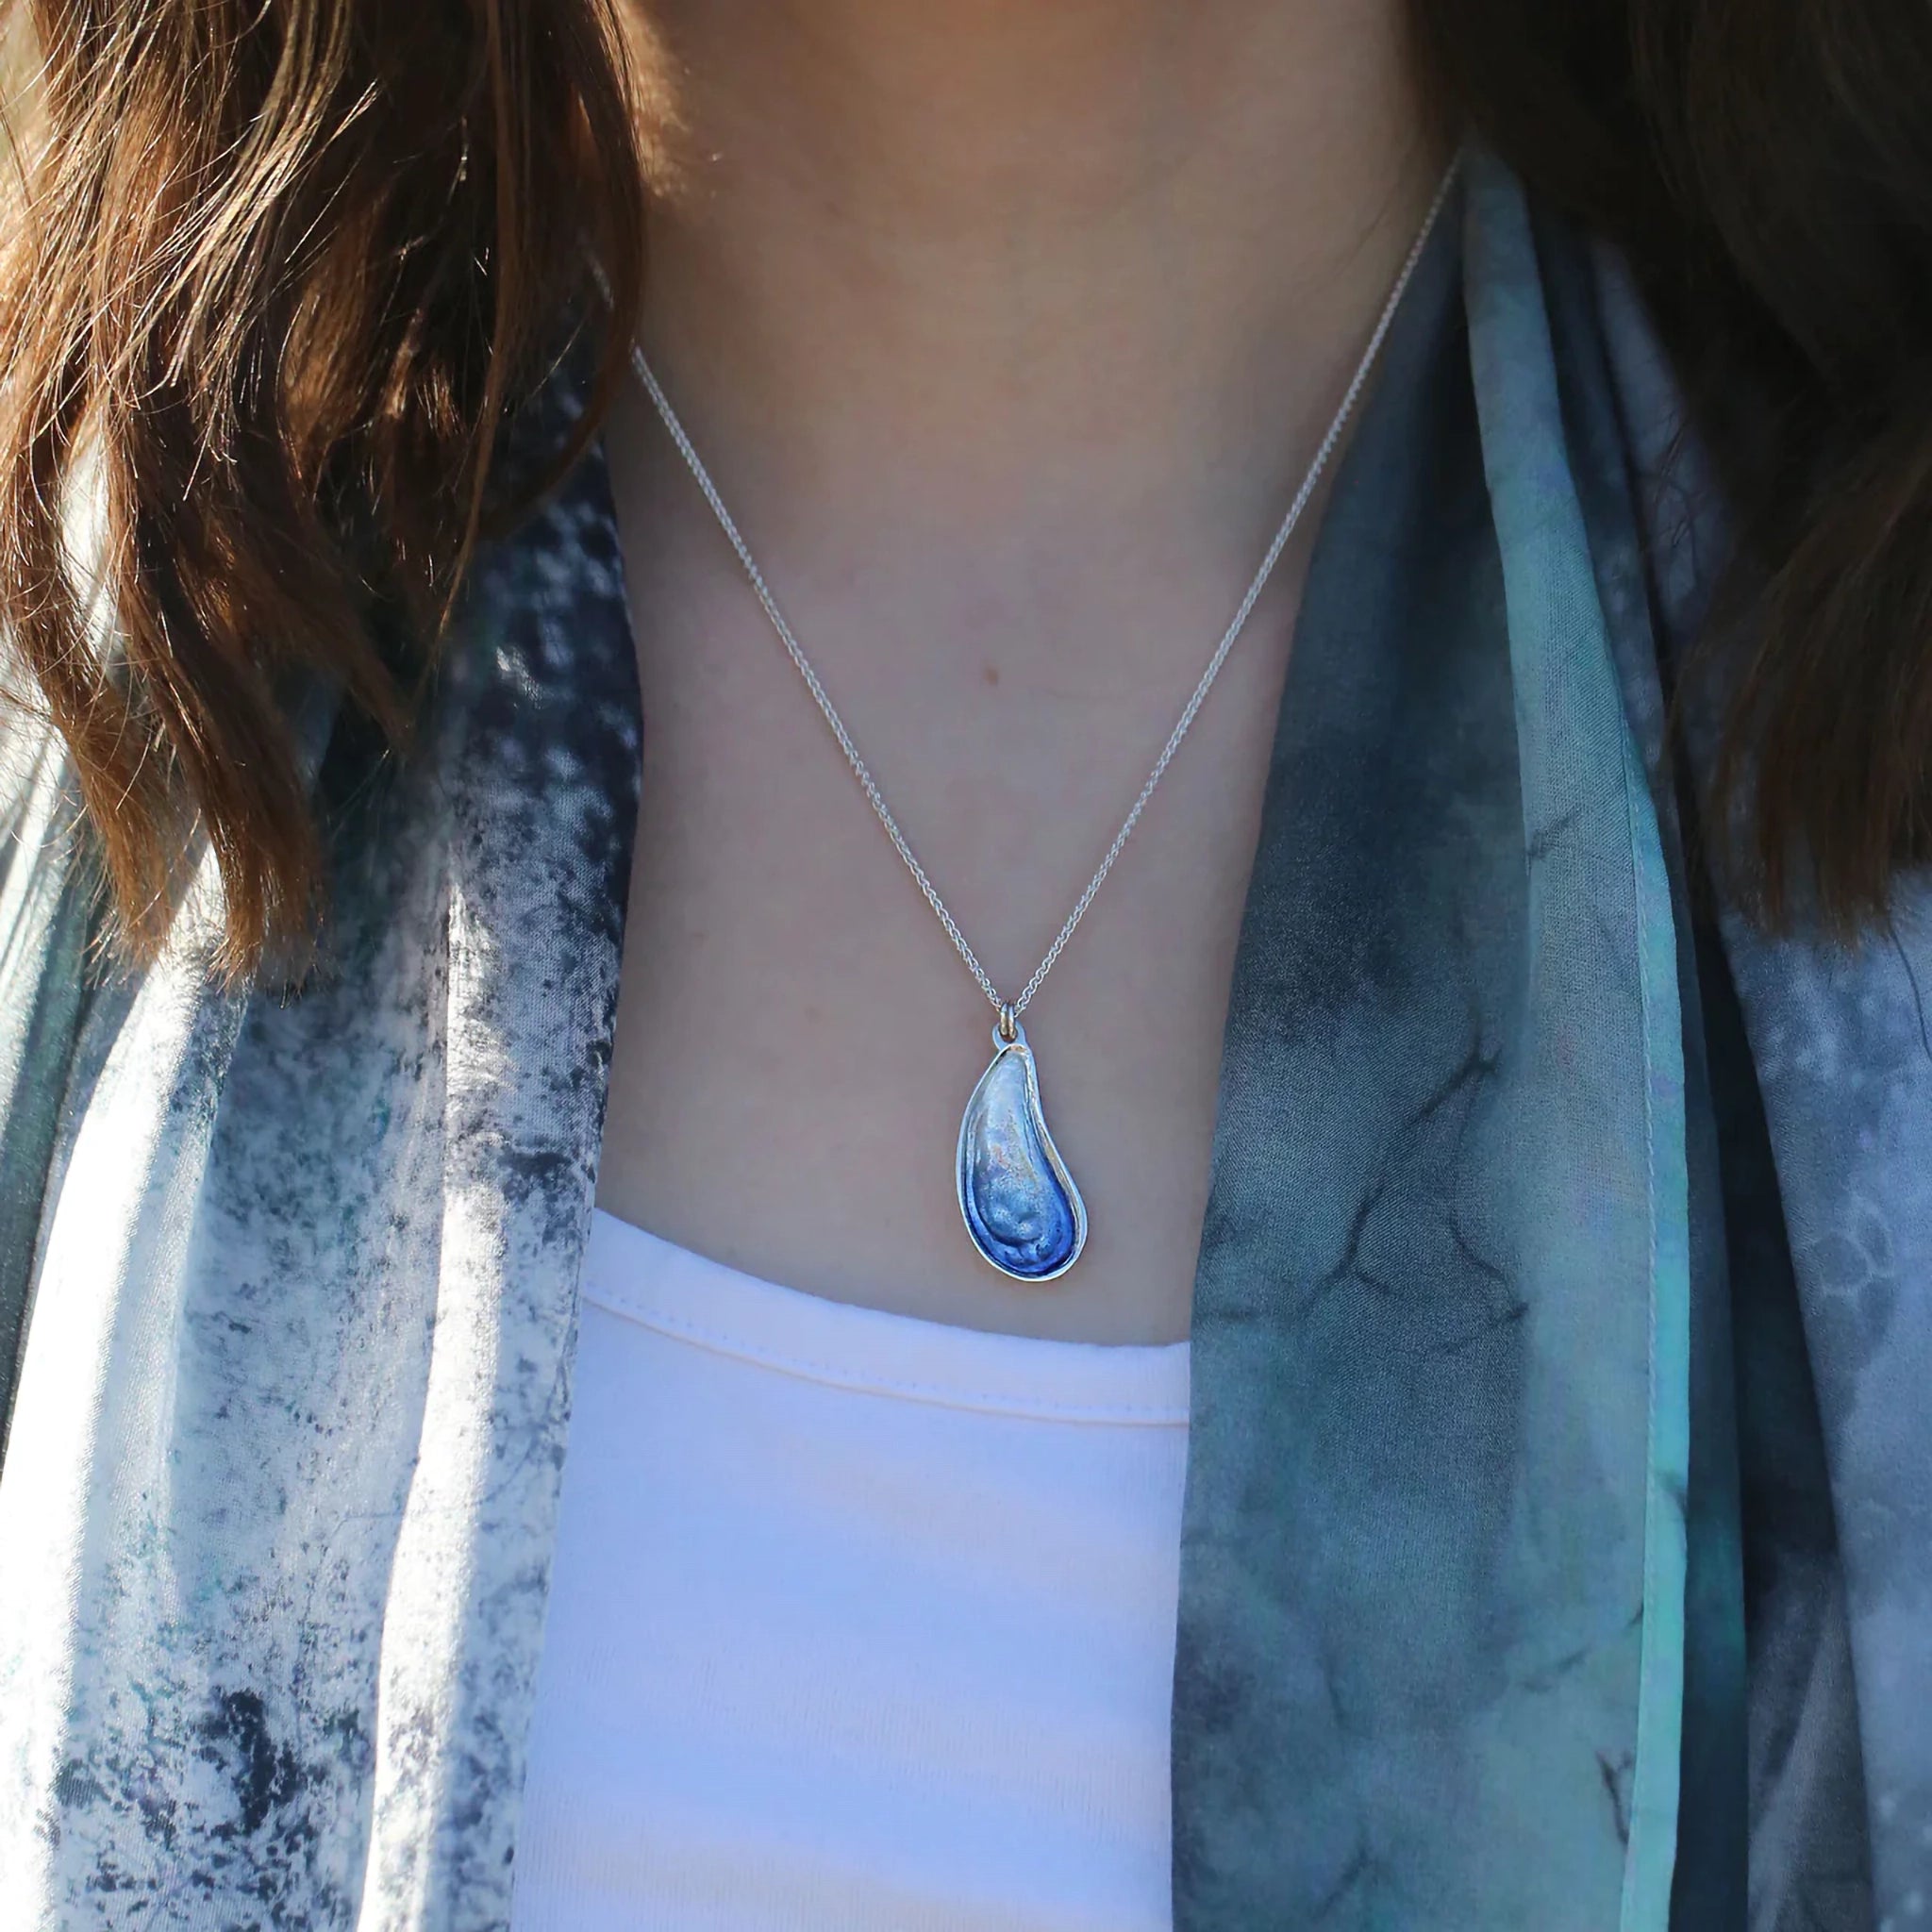 A model wearing a mussel shaped silver pendant with blue enamel